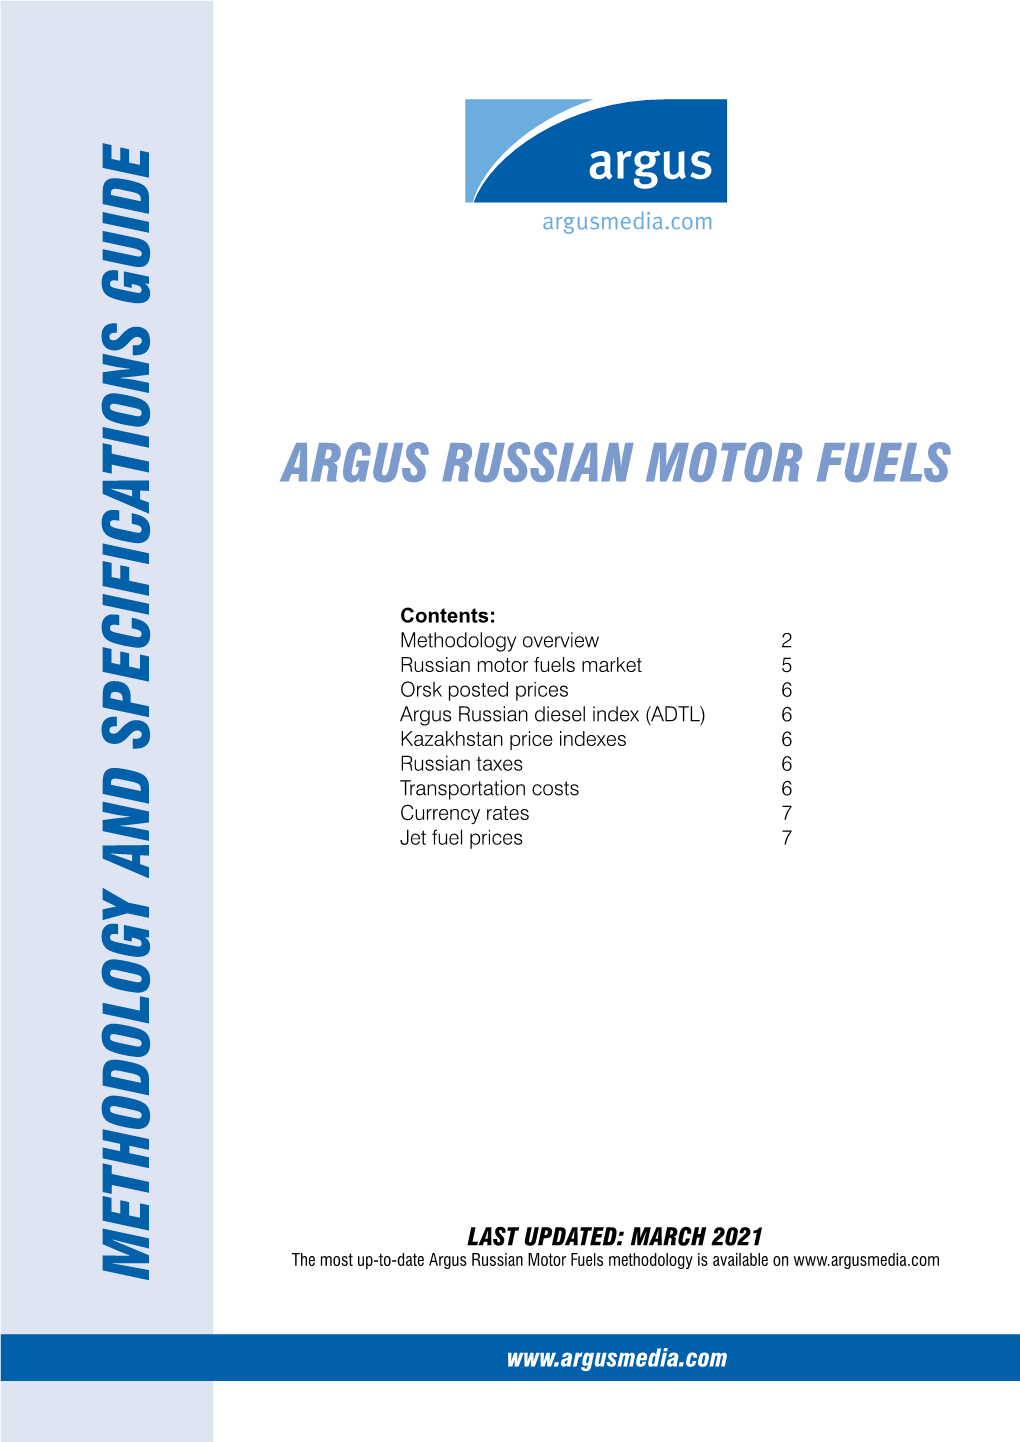 Argus Russian Motor Fuels